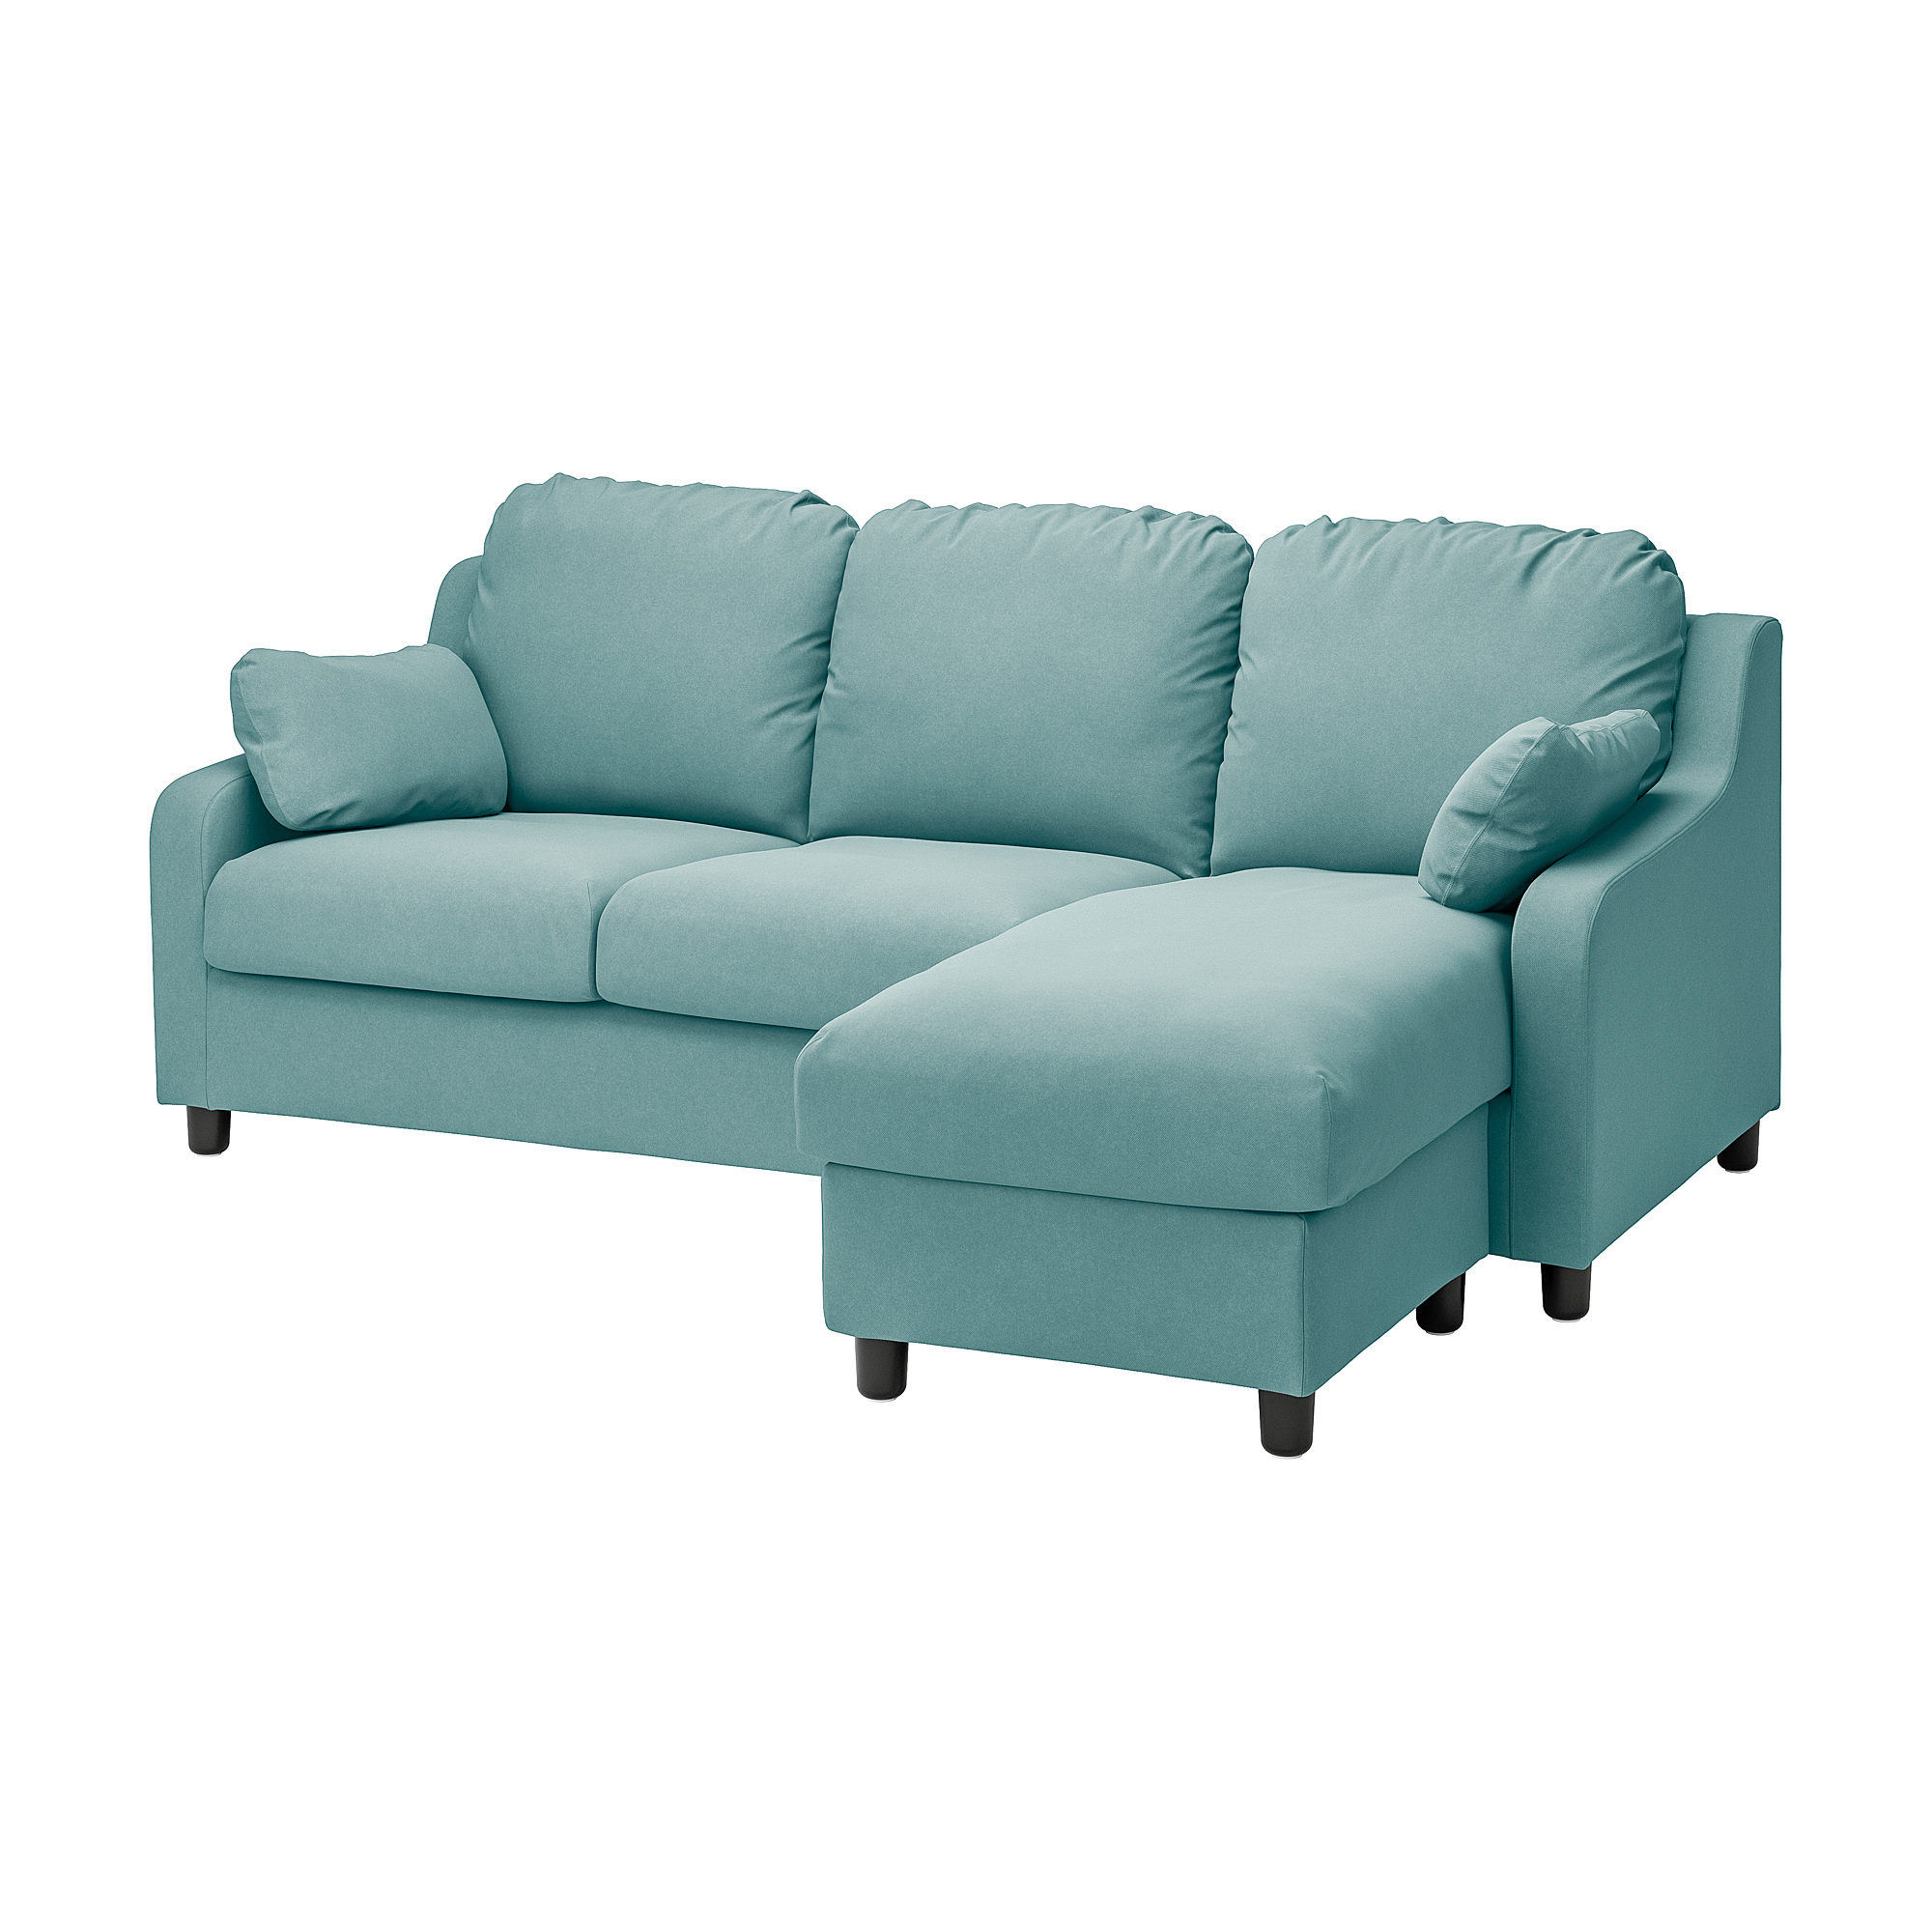 VINLIDEN cover for 3-seat sofa